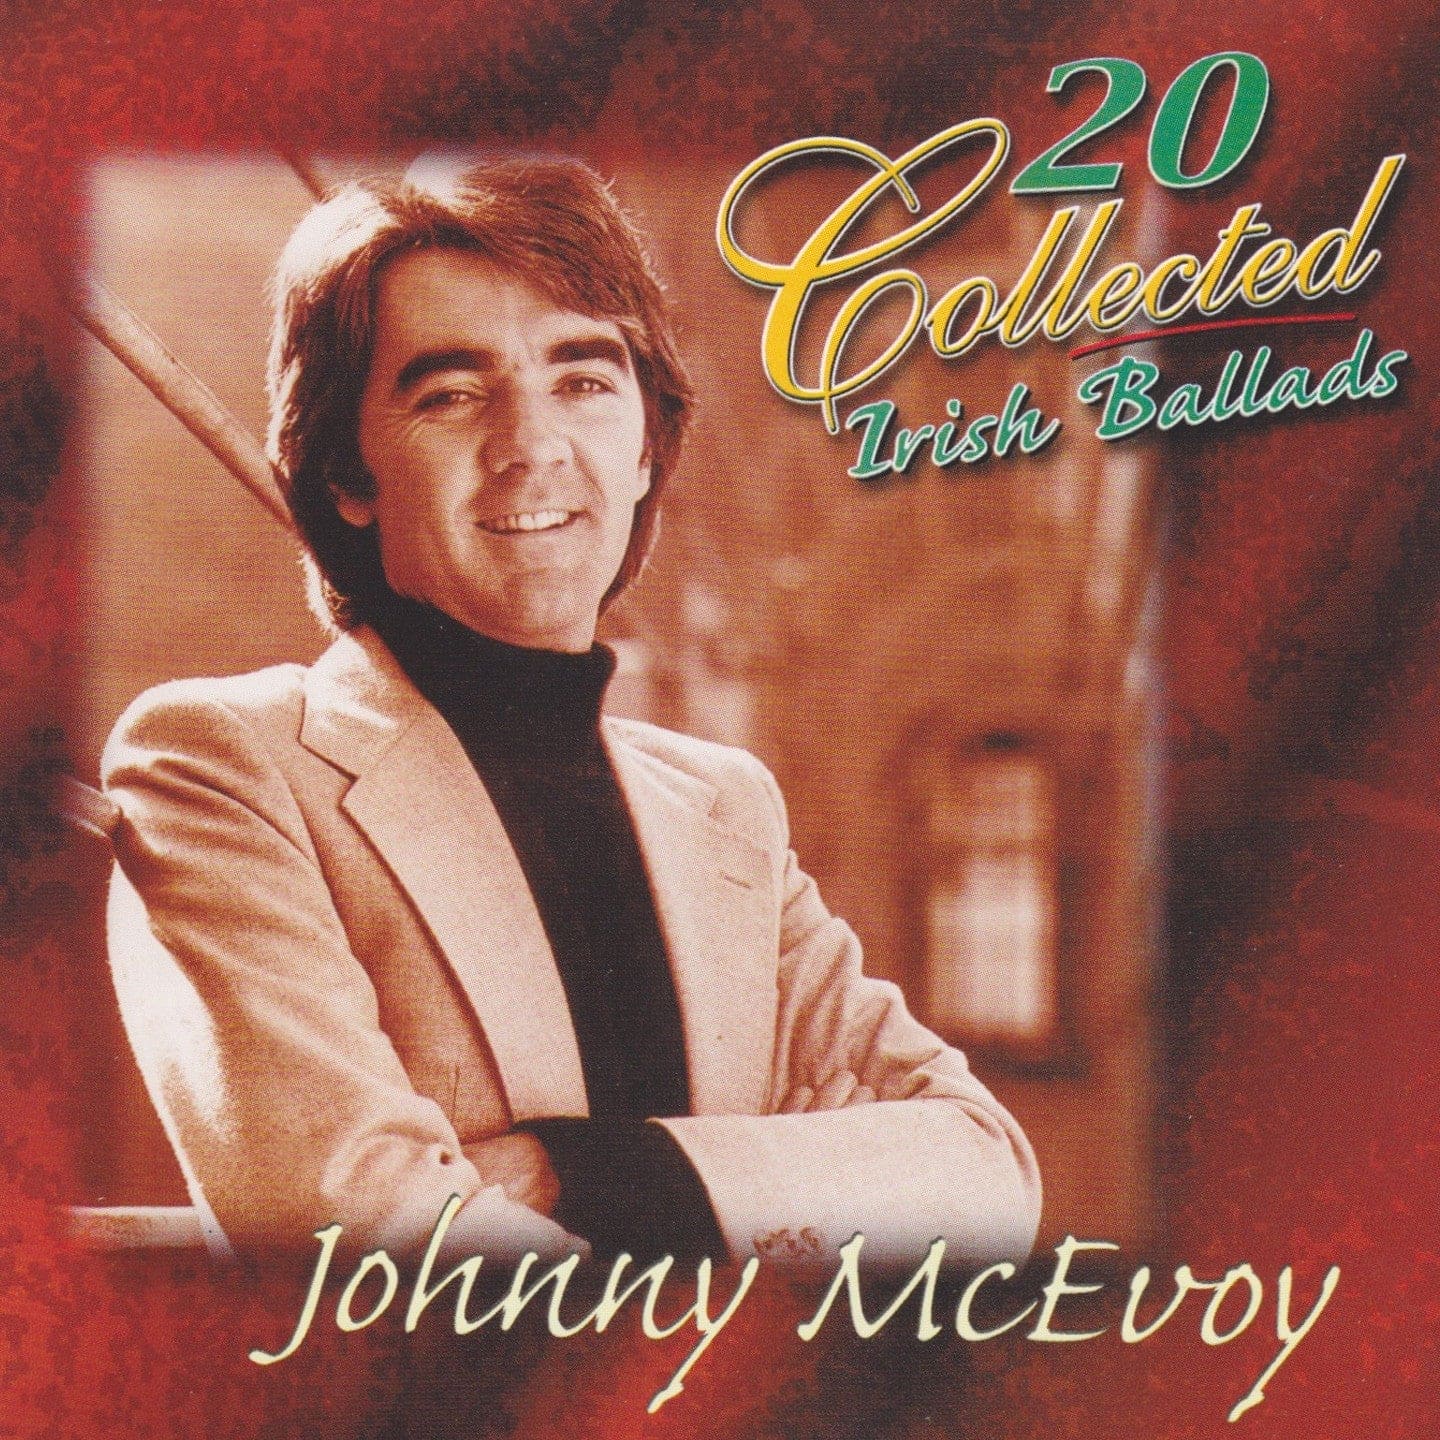 20 Collected Irish Ballads - Johnny McEvoy [CD]